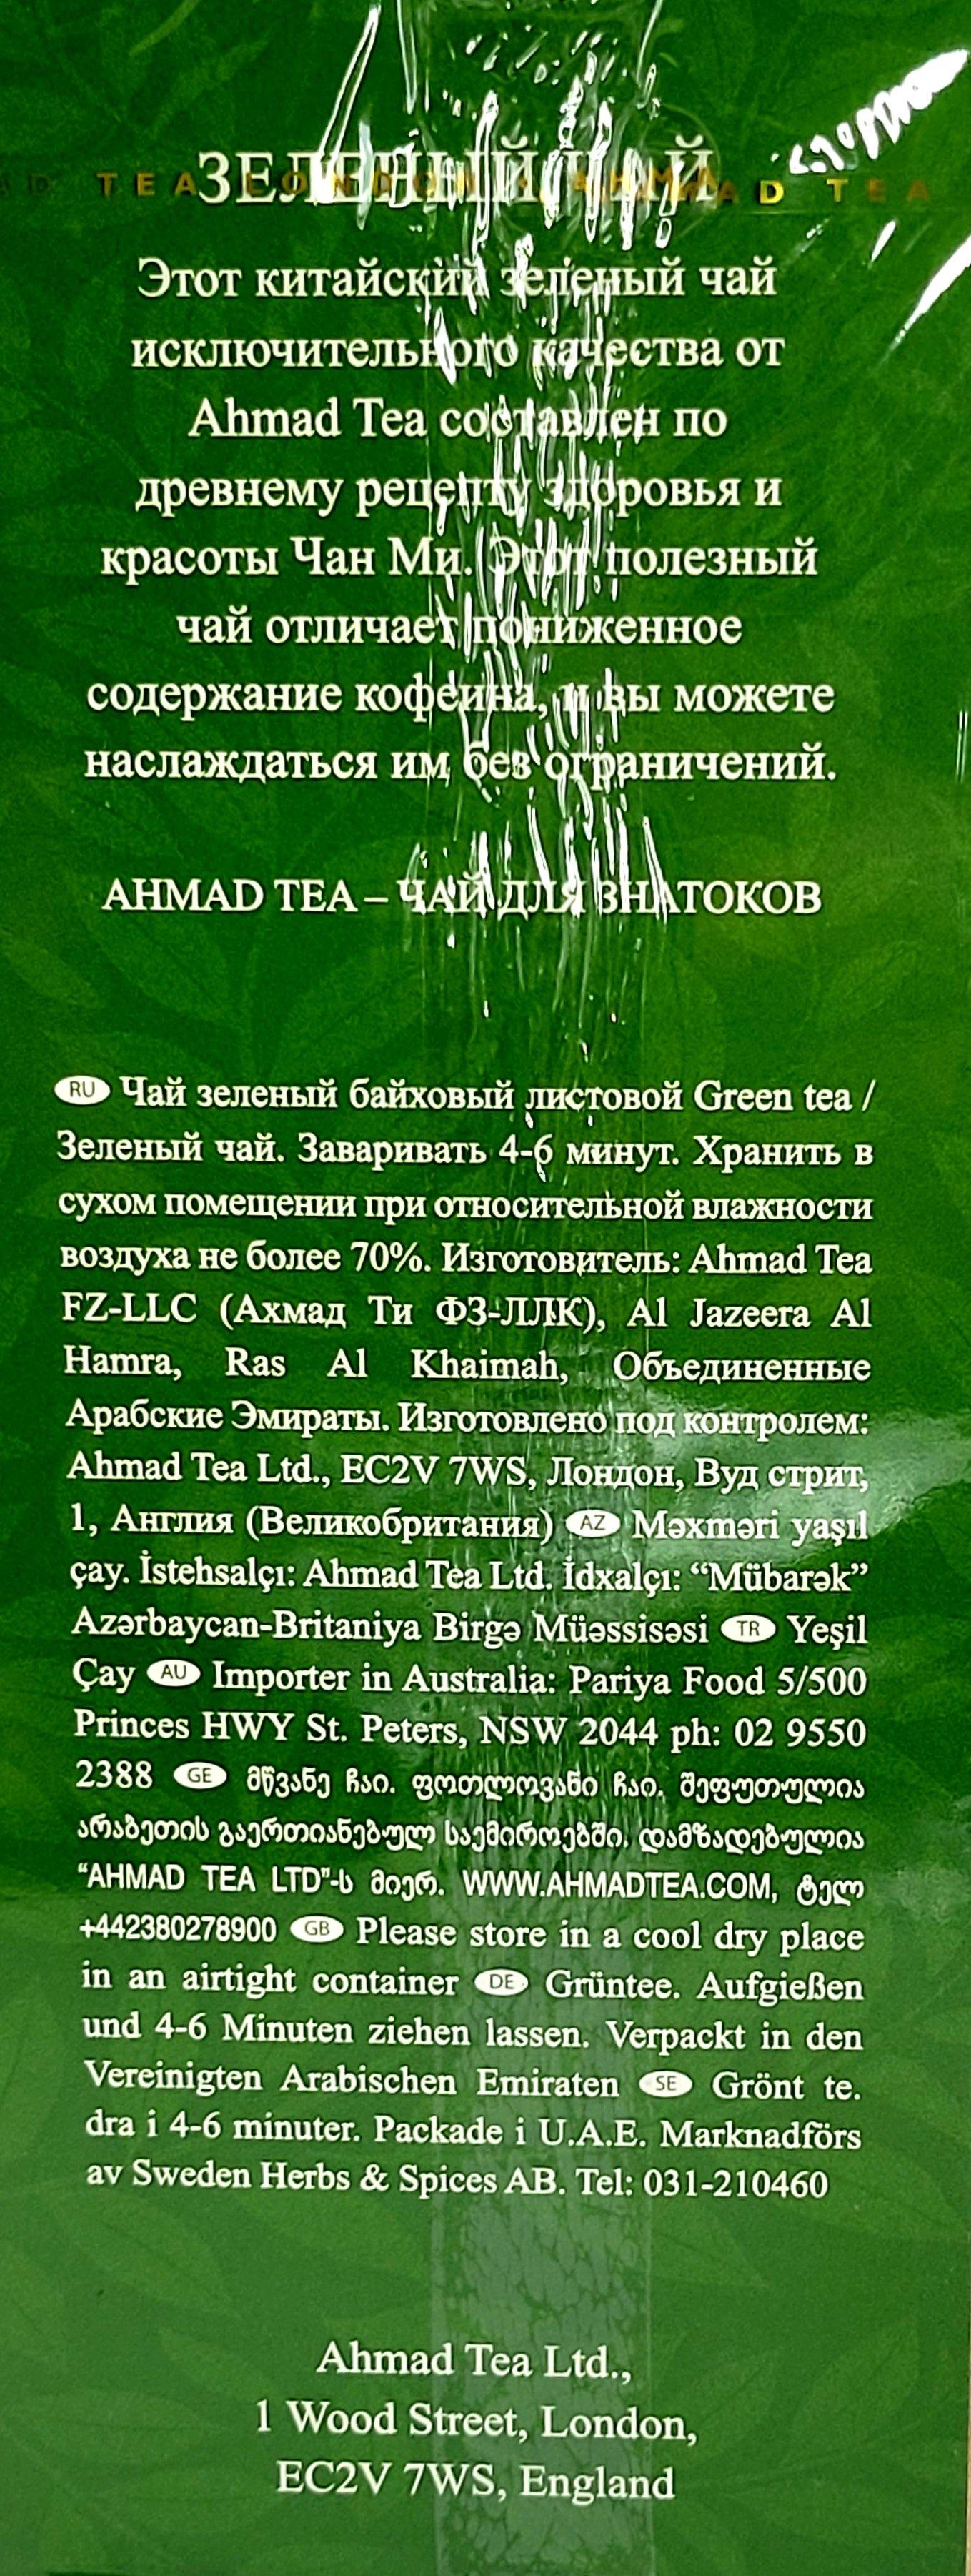 Ahmad Tea Green Tea - Arabian Shopping Zone